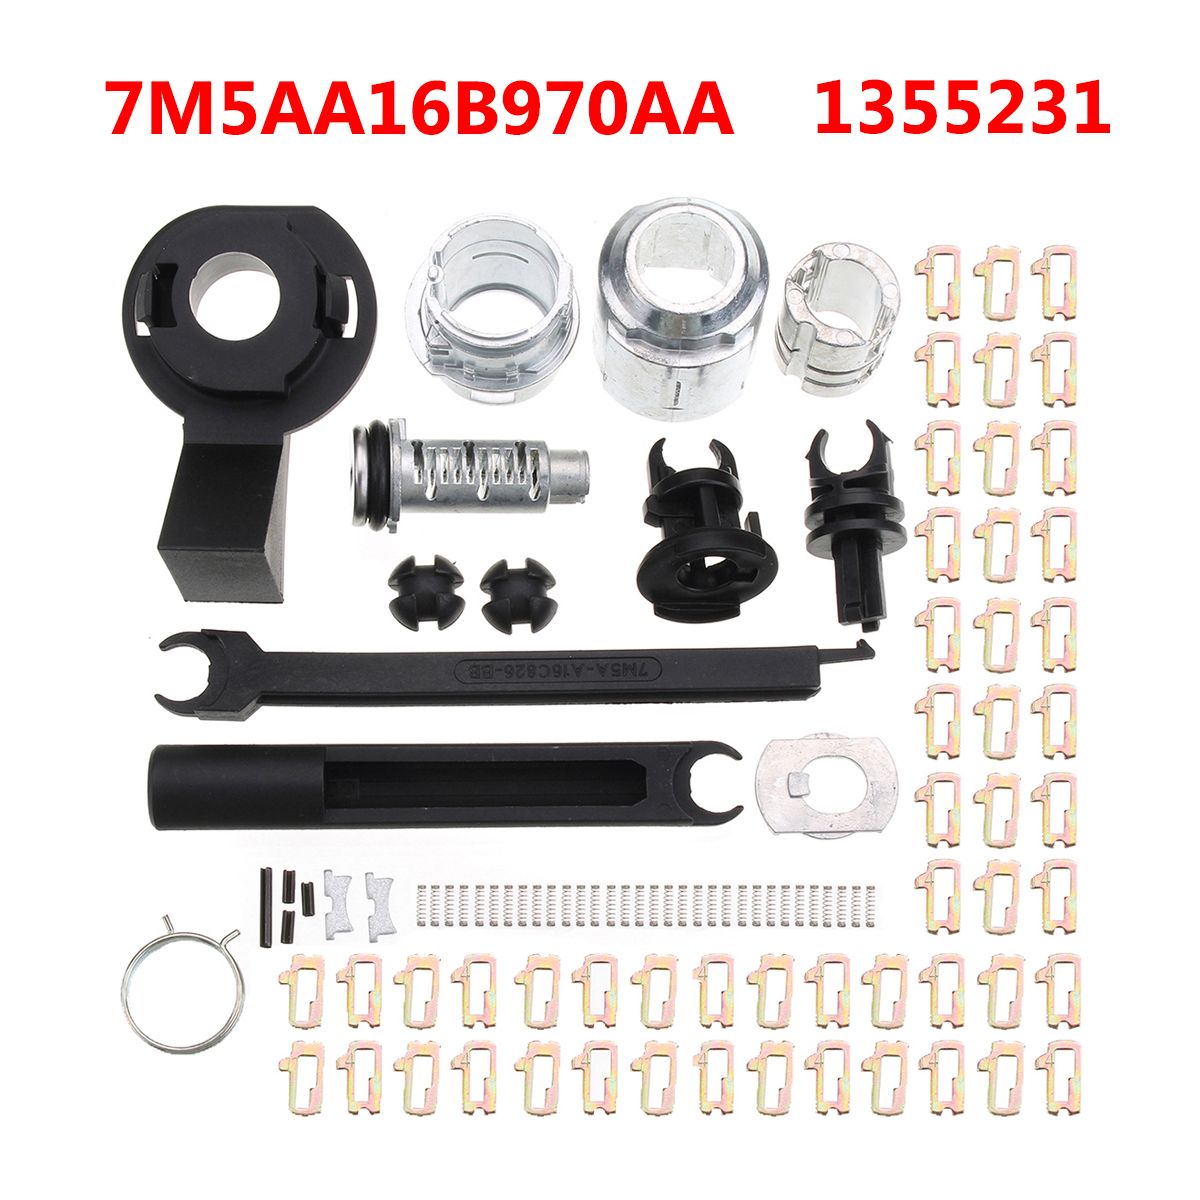 Bonnet-Release-Lock-Repair-Kit-Latch-for-Ford-Focus-MK2-2004-2012-7M5AA16B970AA-1253633